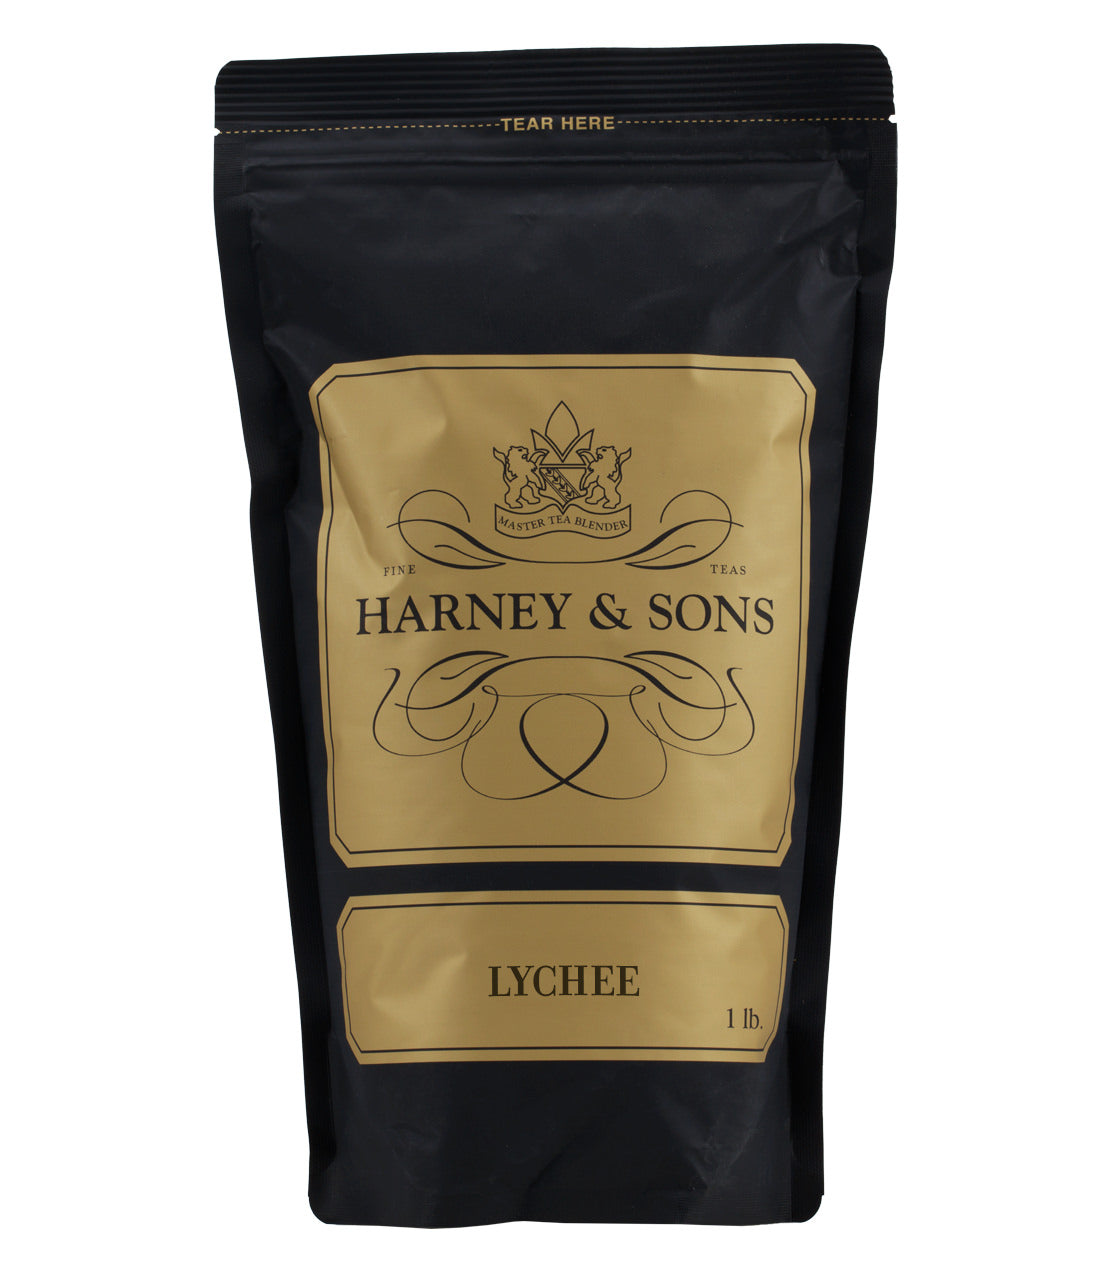 Lychee - Loose 1 lb. Bag - Harney & Sons Fine Teas